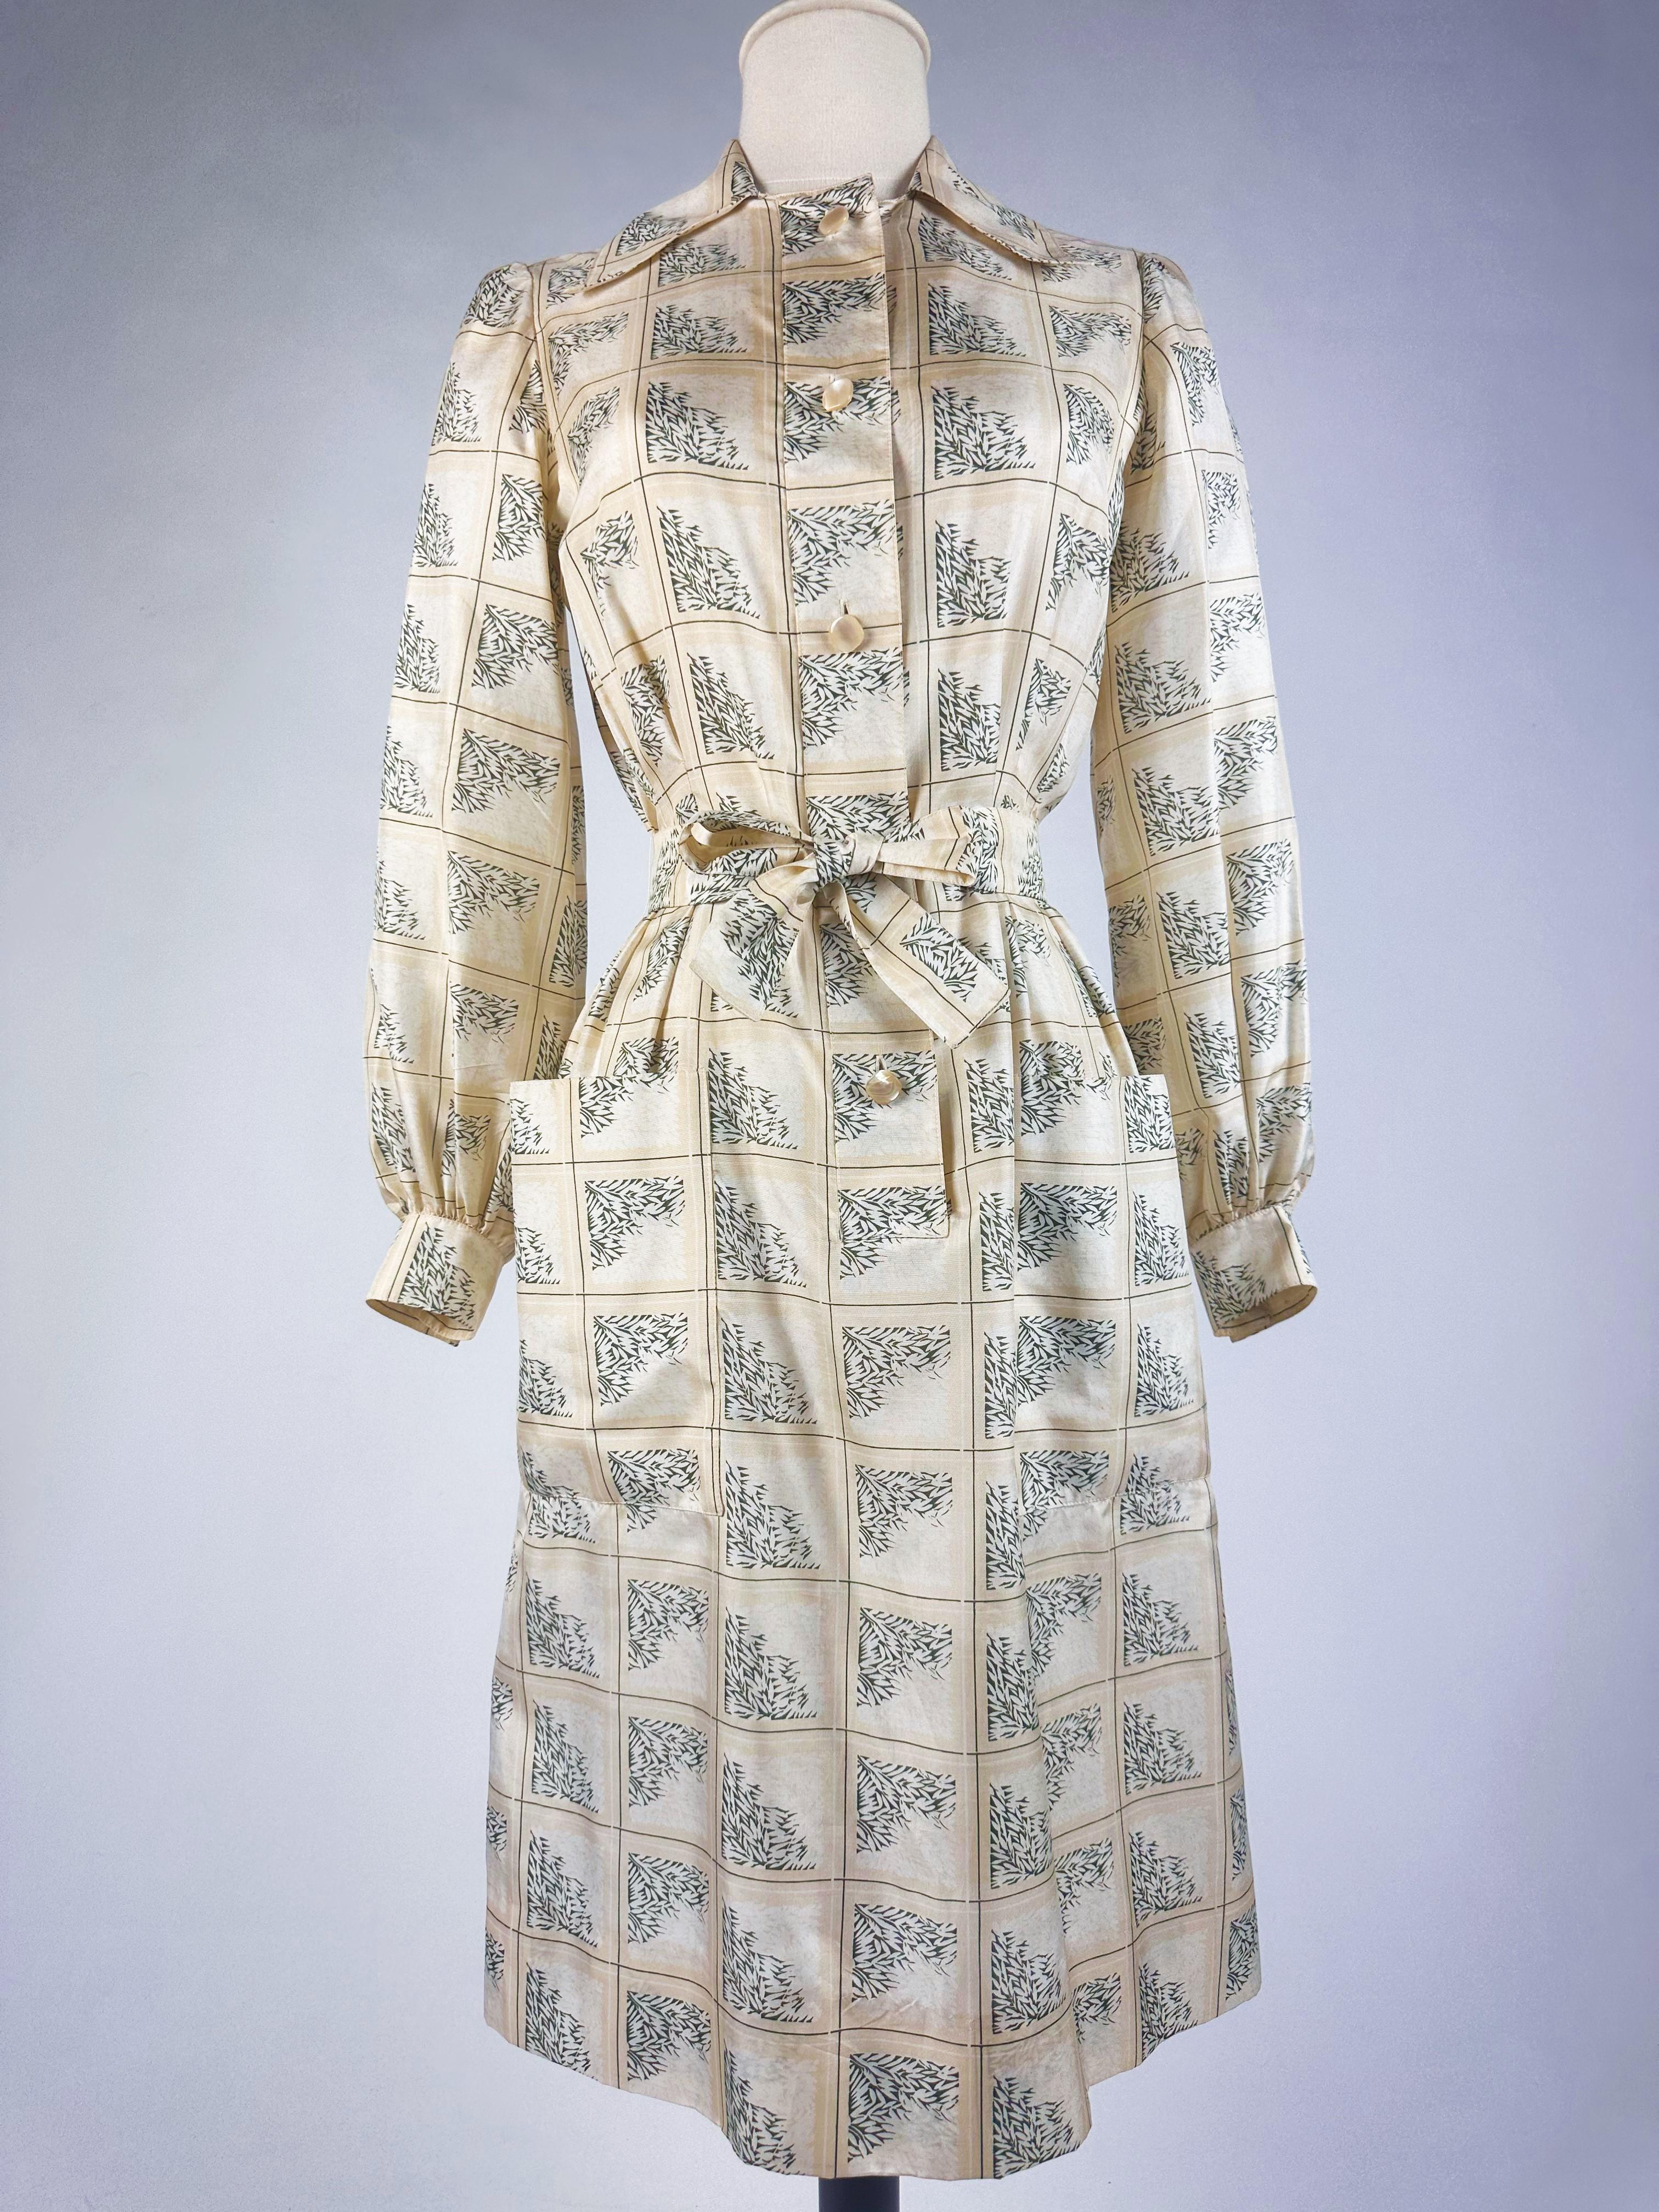 Women's Blouse dress in printed taffeta by Gérard Pipart for Nina Ricci Circa 1985